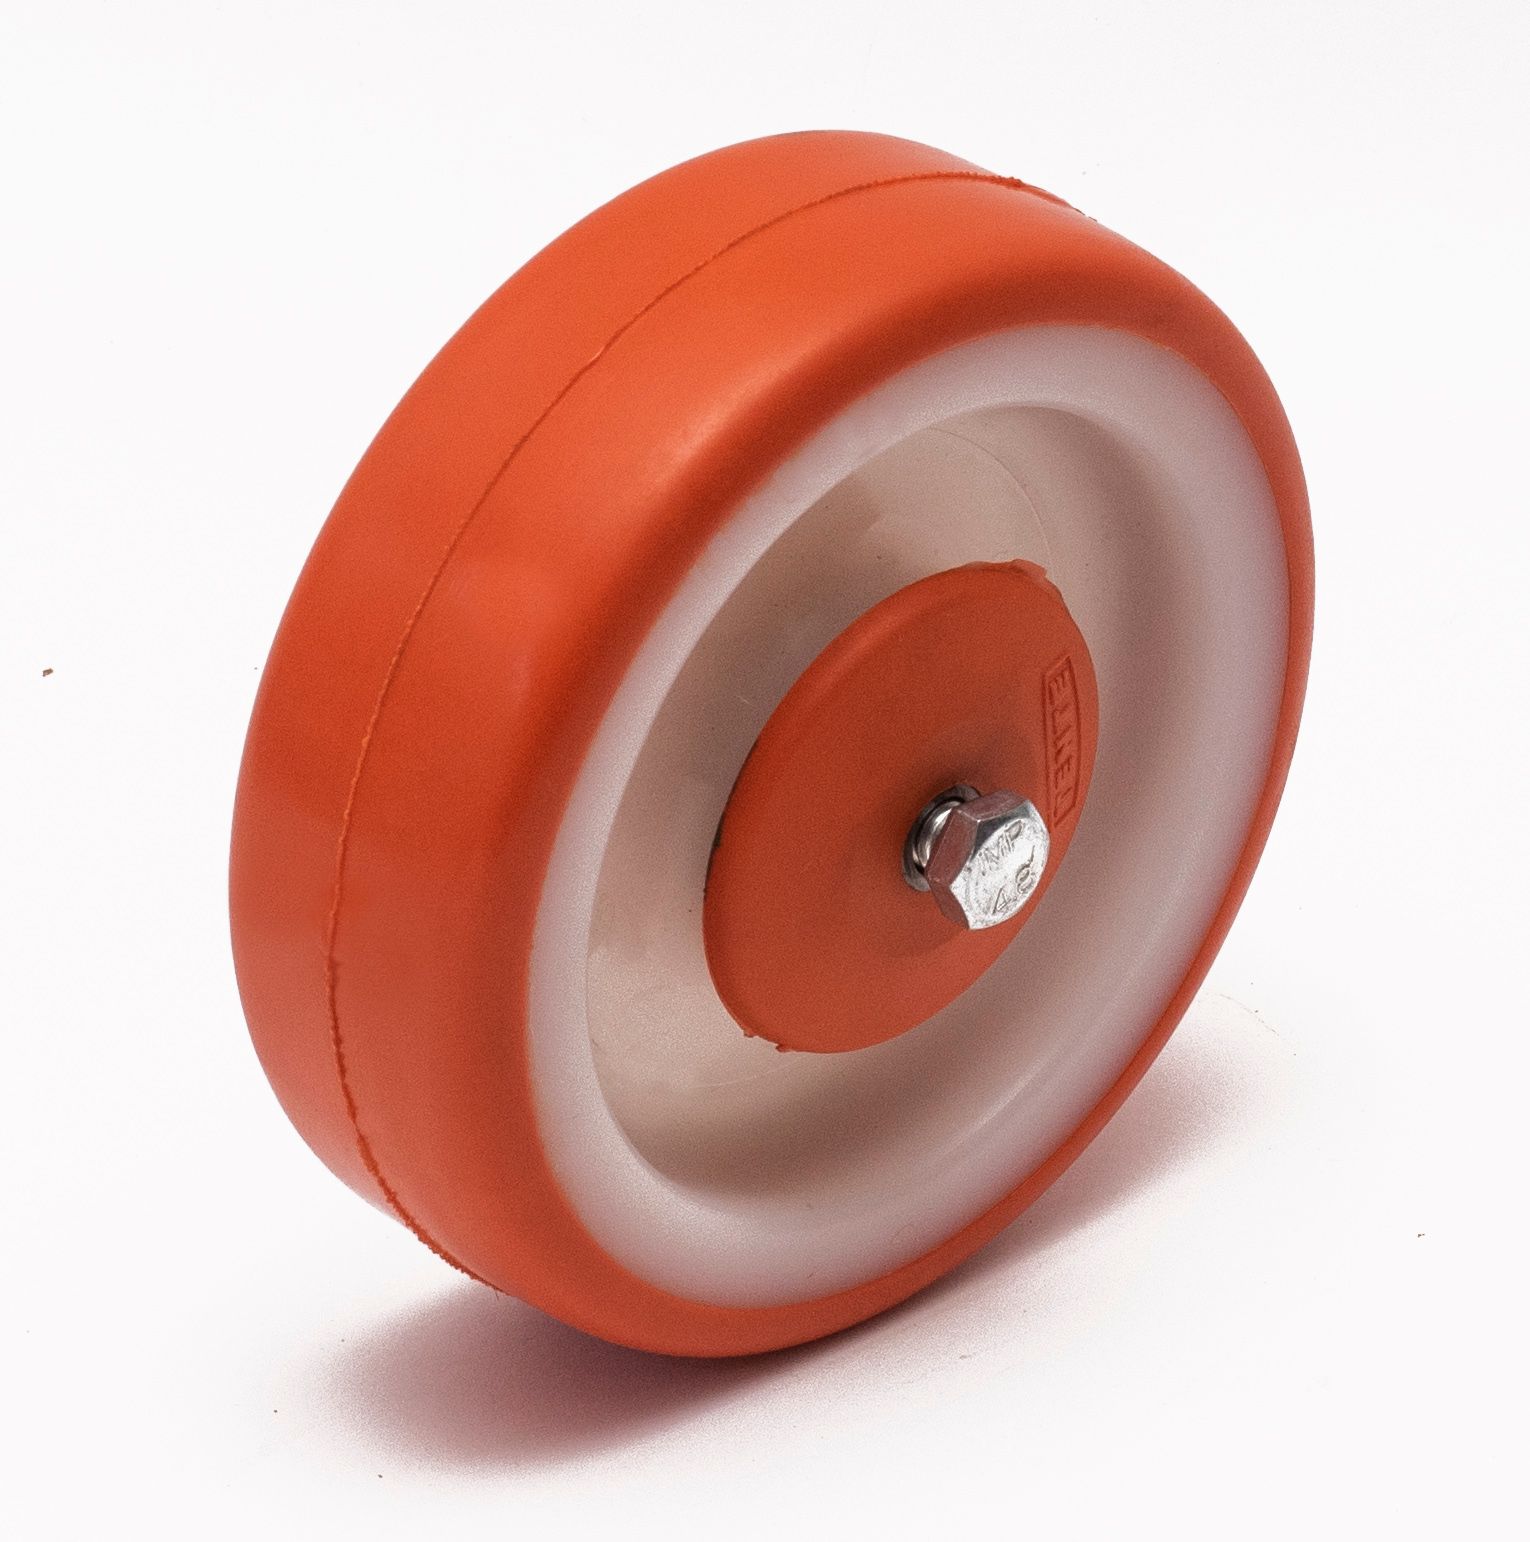 UAR – Polyurethane tyre on nylon core castor wheel